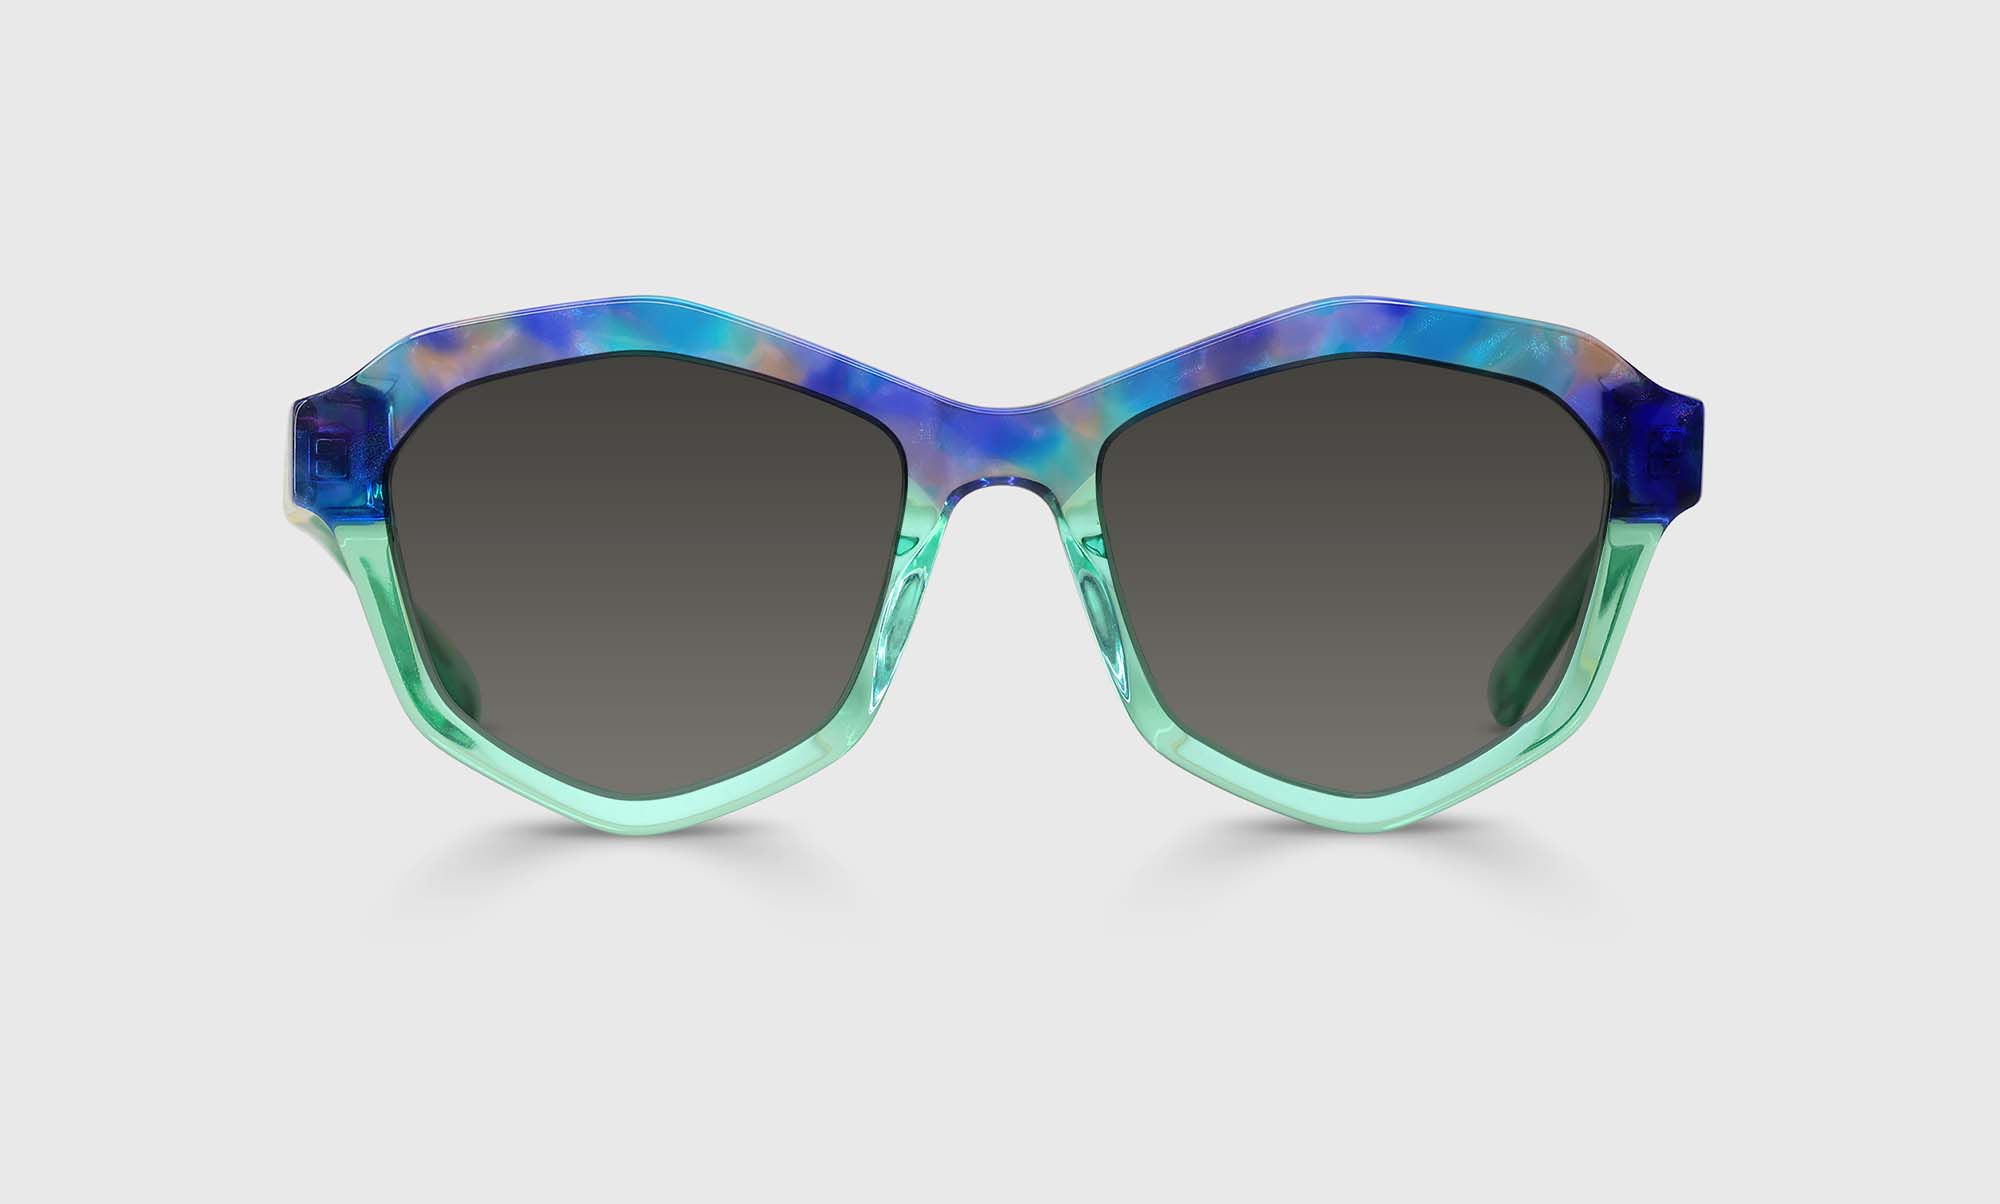 17-pg | eyebobs Tough Nut, Average, Geometric, bifocal reader sunglasses, polarized grey sunglasses